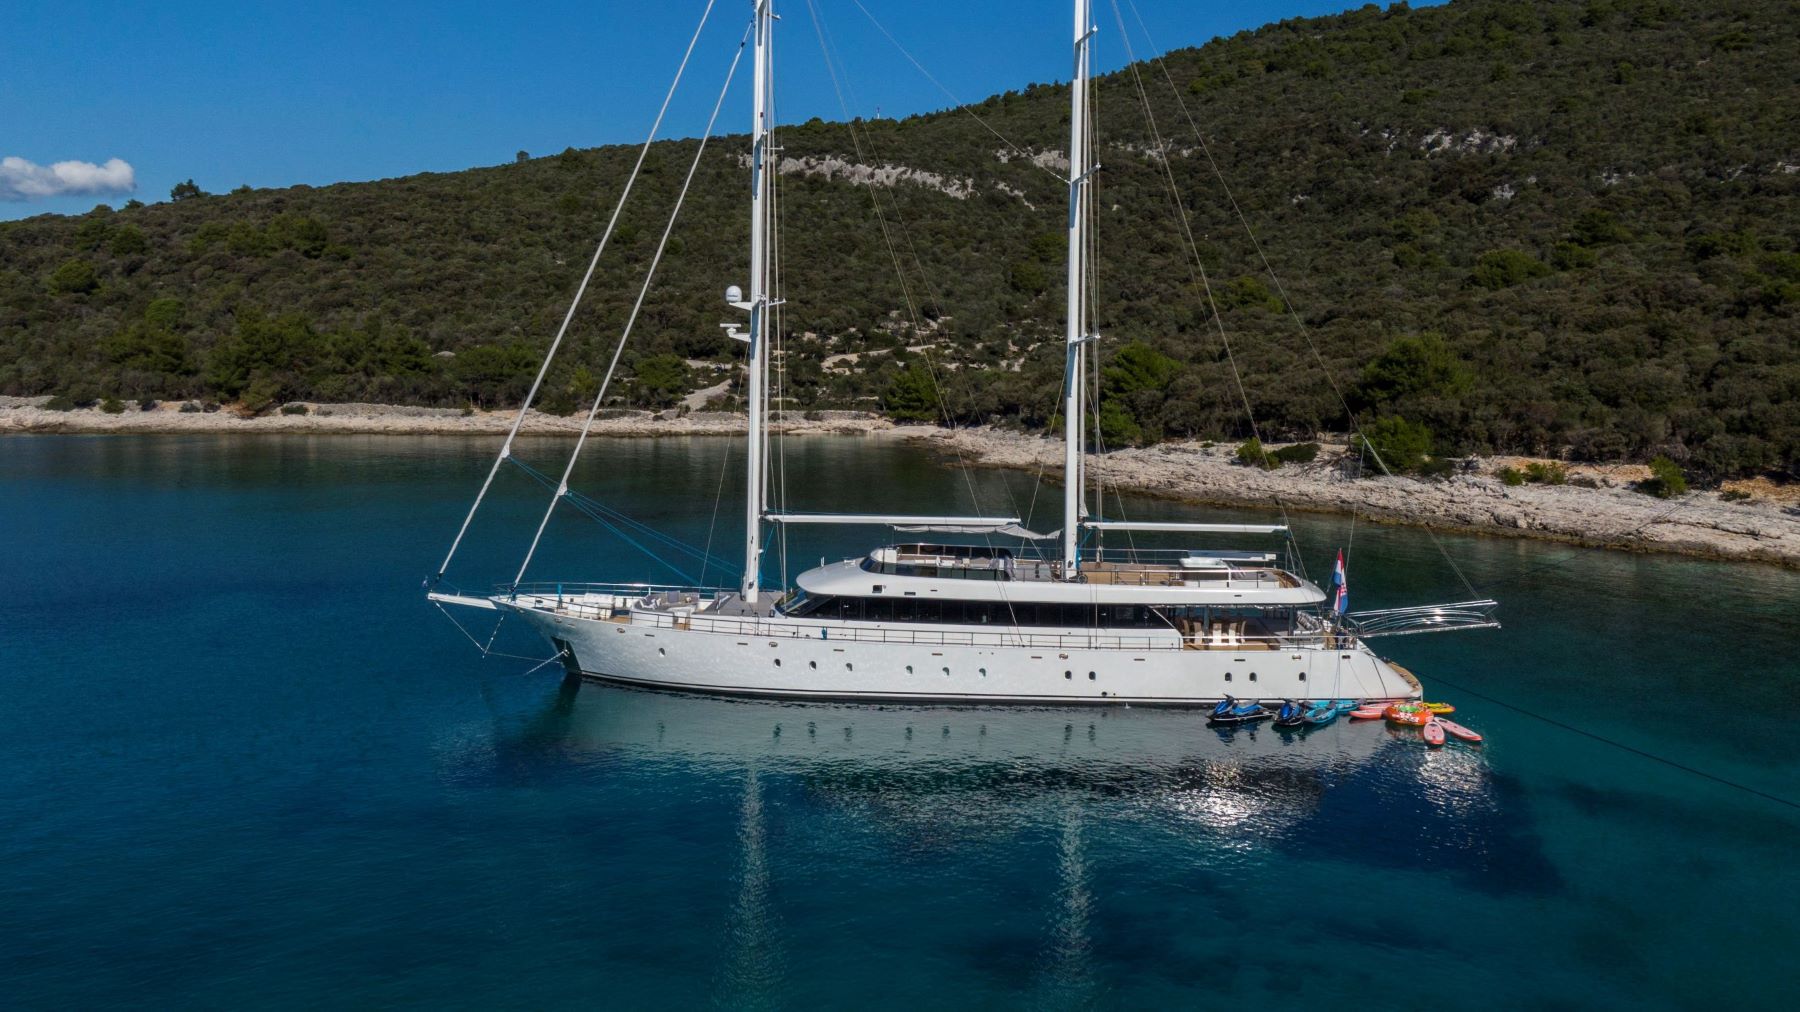 Aurum Sky sailing yacht - anchored with many sea toys tied to it, near Croatia's coastline. Ready for its Croatia sailing.